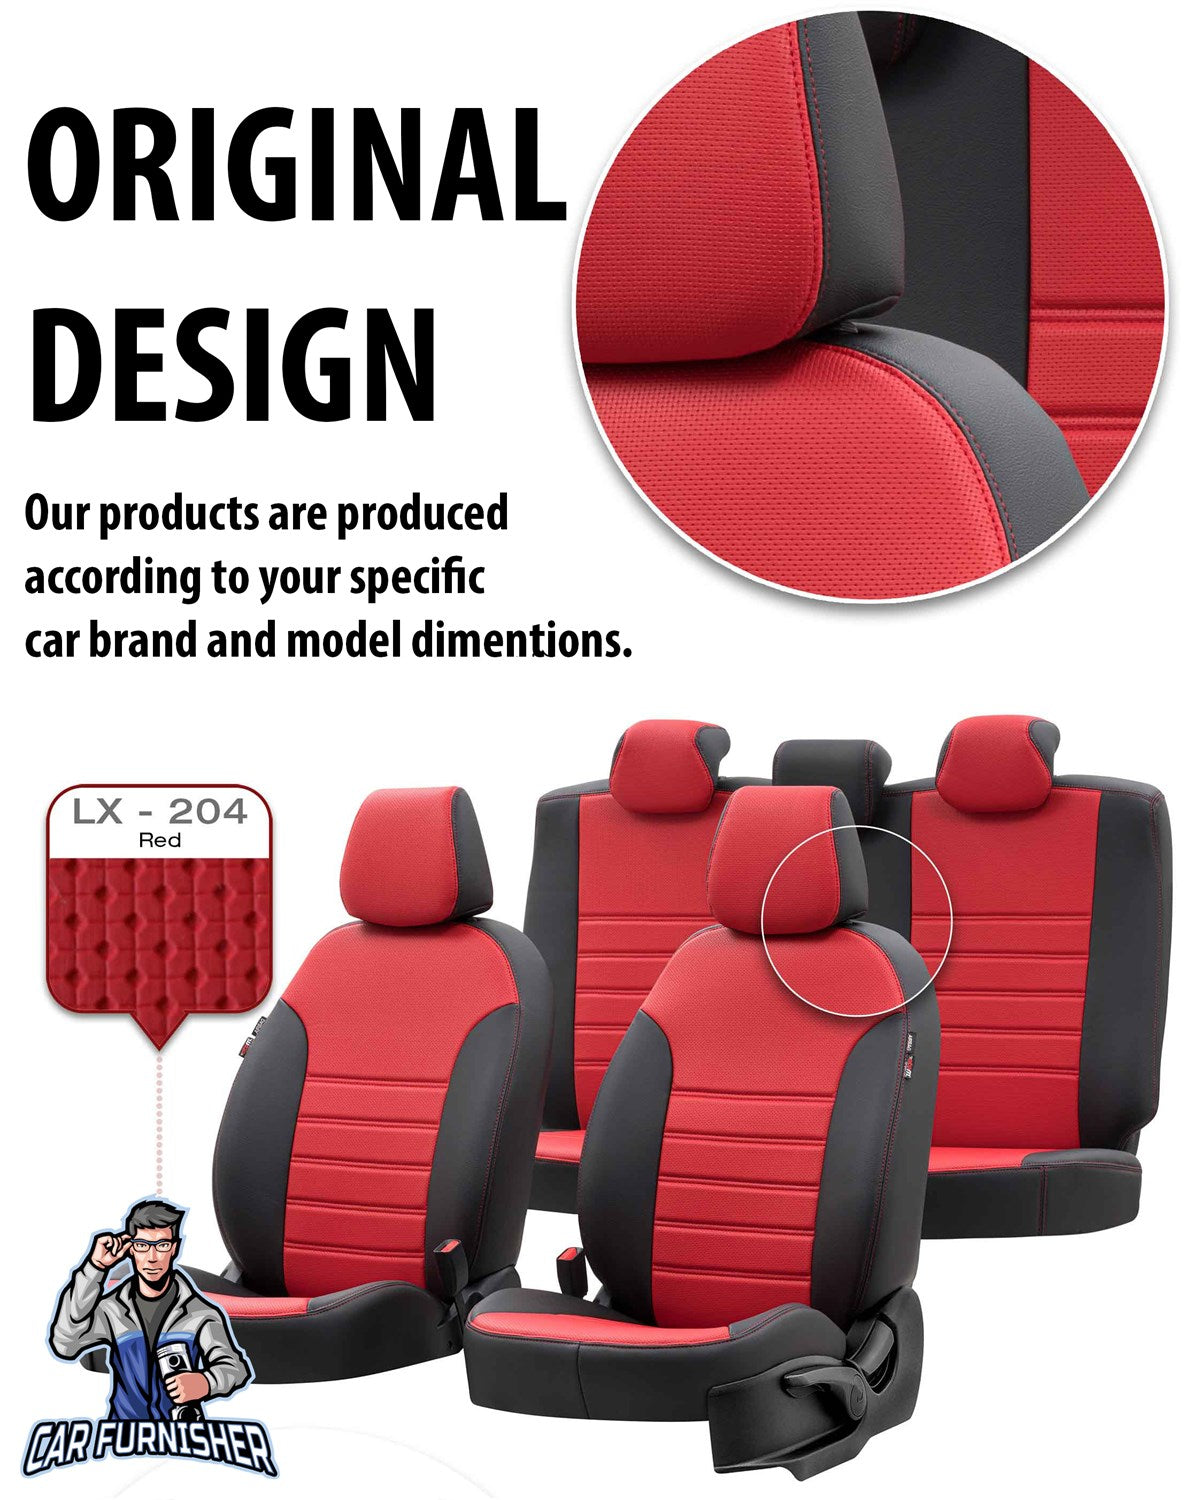 Renault Kadjar Seat Covers New York Leather Design Smoked Black Leather